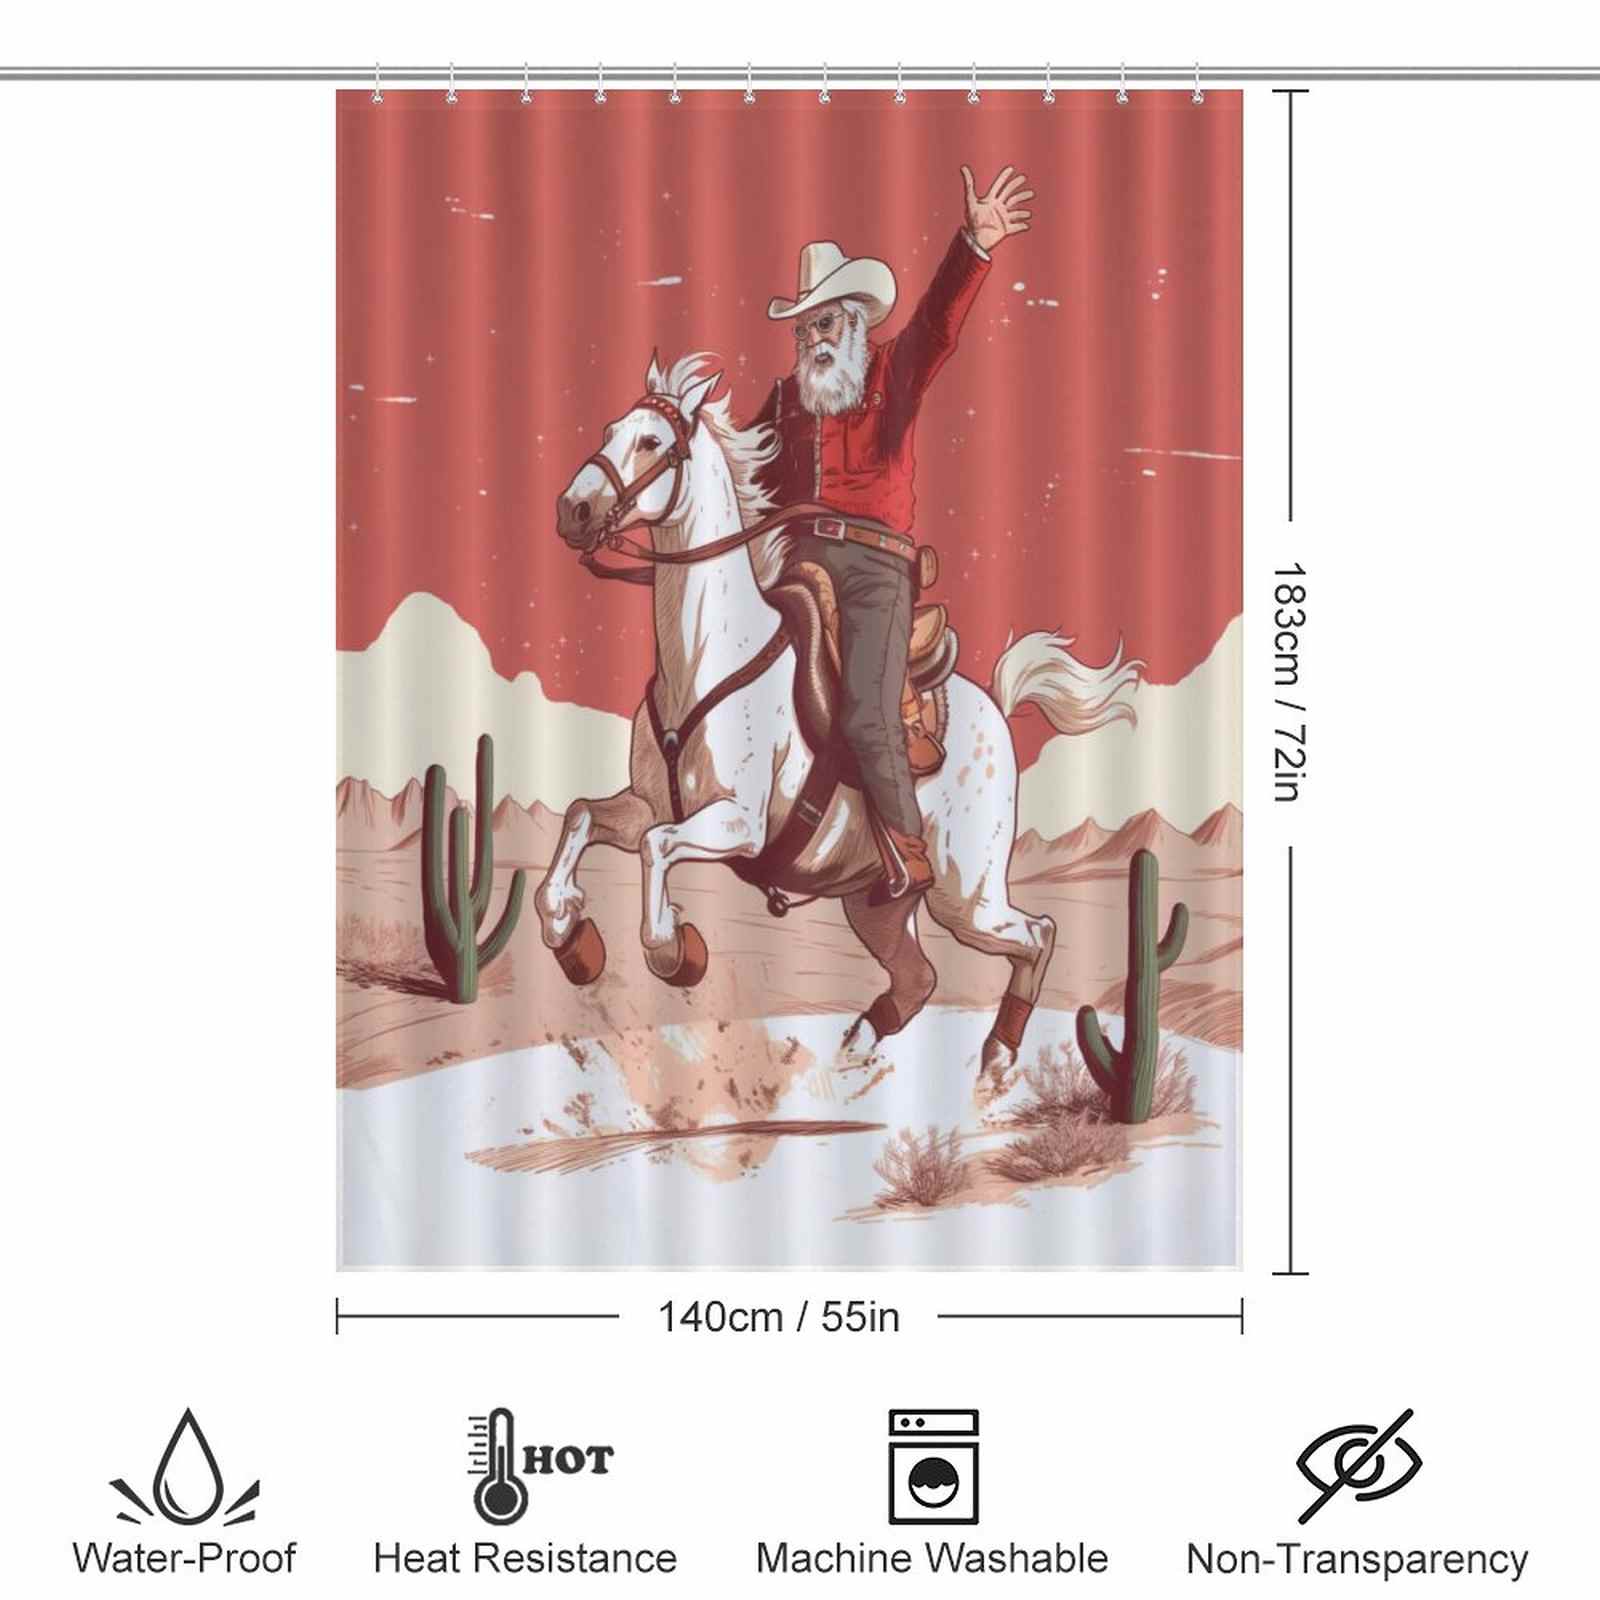 A Rustic Cowboy Santa Claus Shower Curtain featuring a cowboy riding a horse by Cotton Cat.